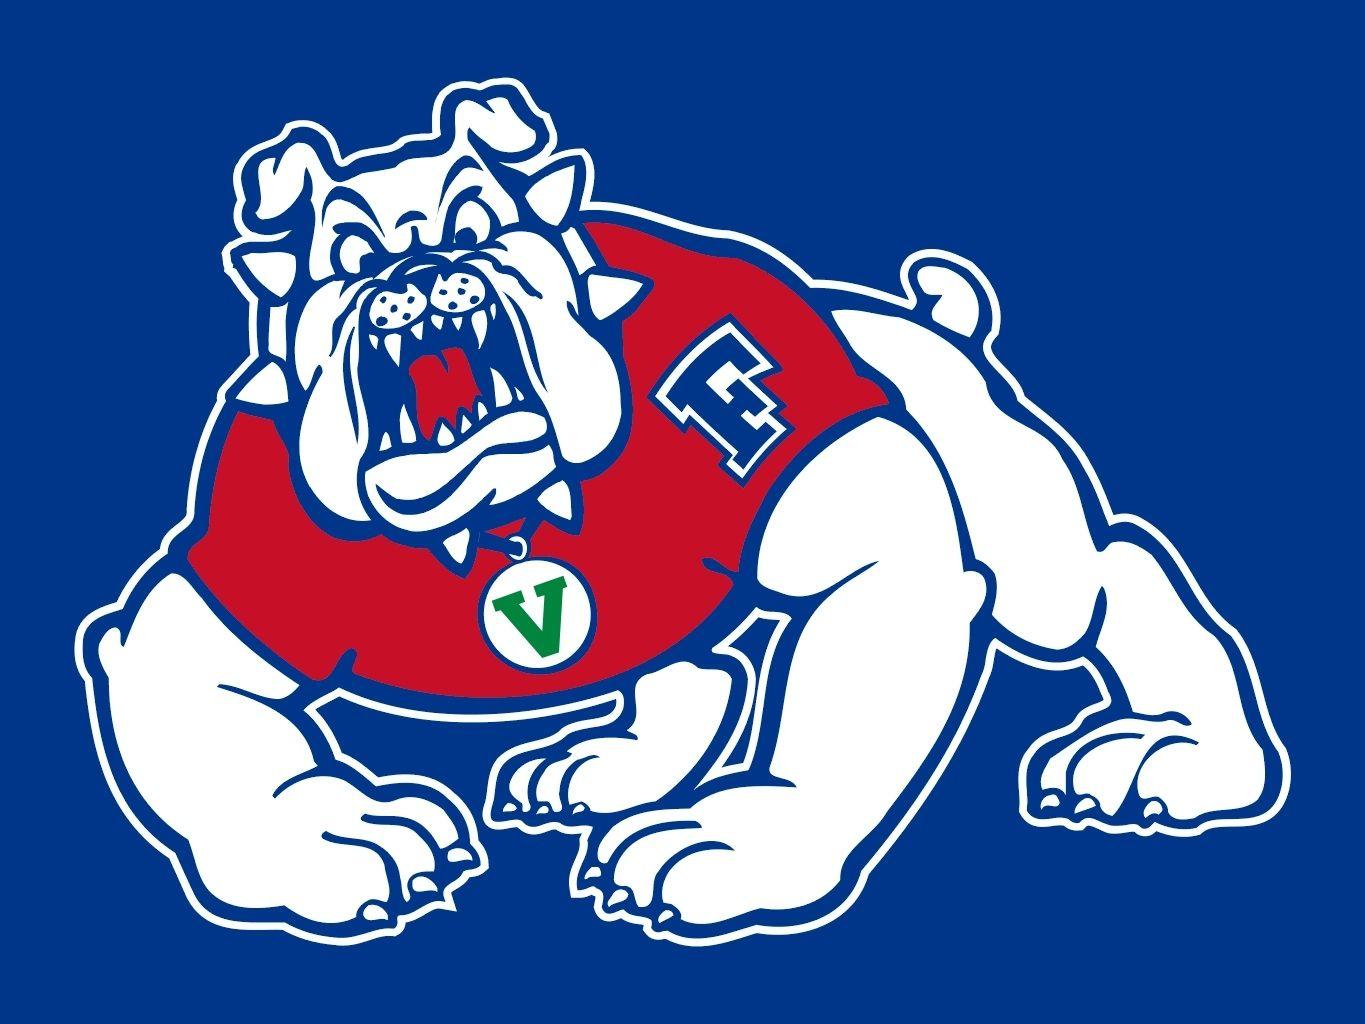 fresno state mascot. Fresno State Bulldogs logo. Tats